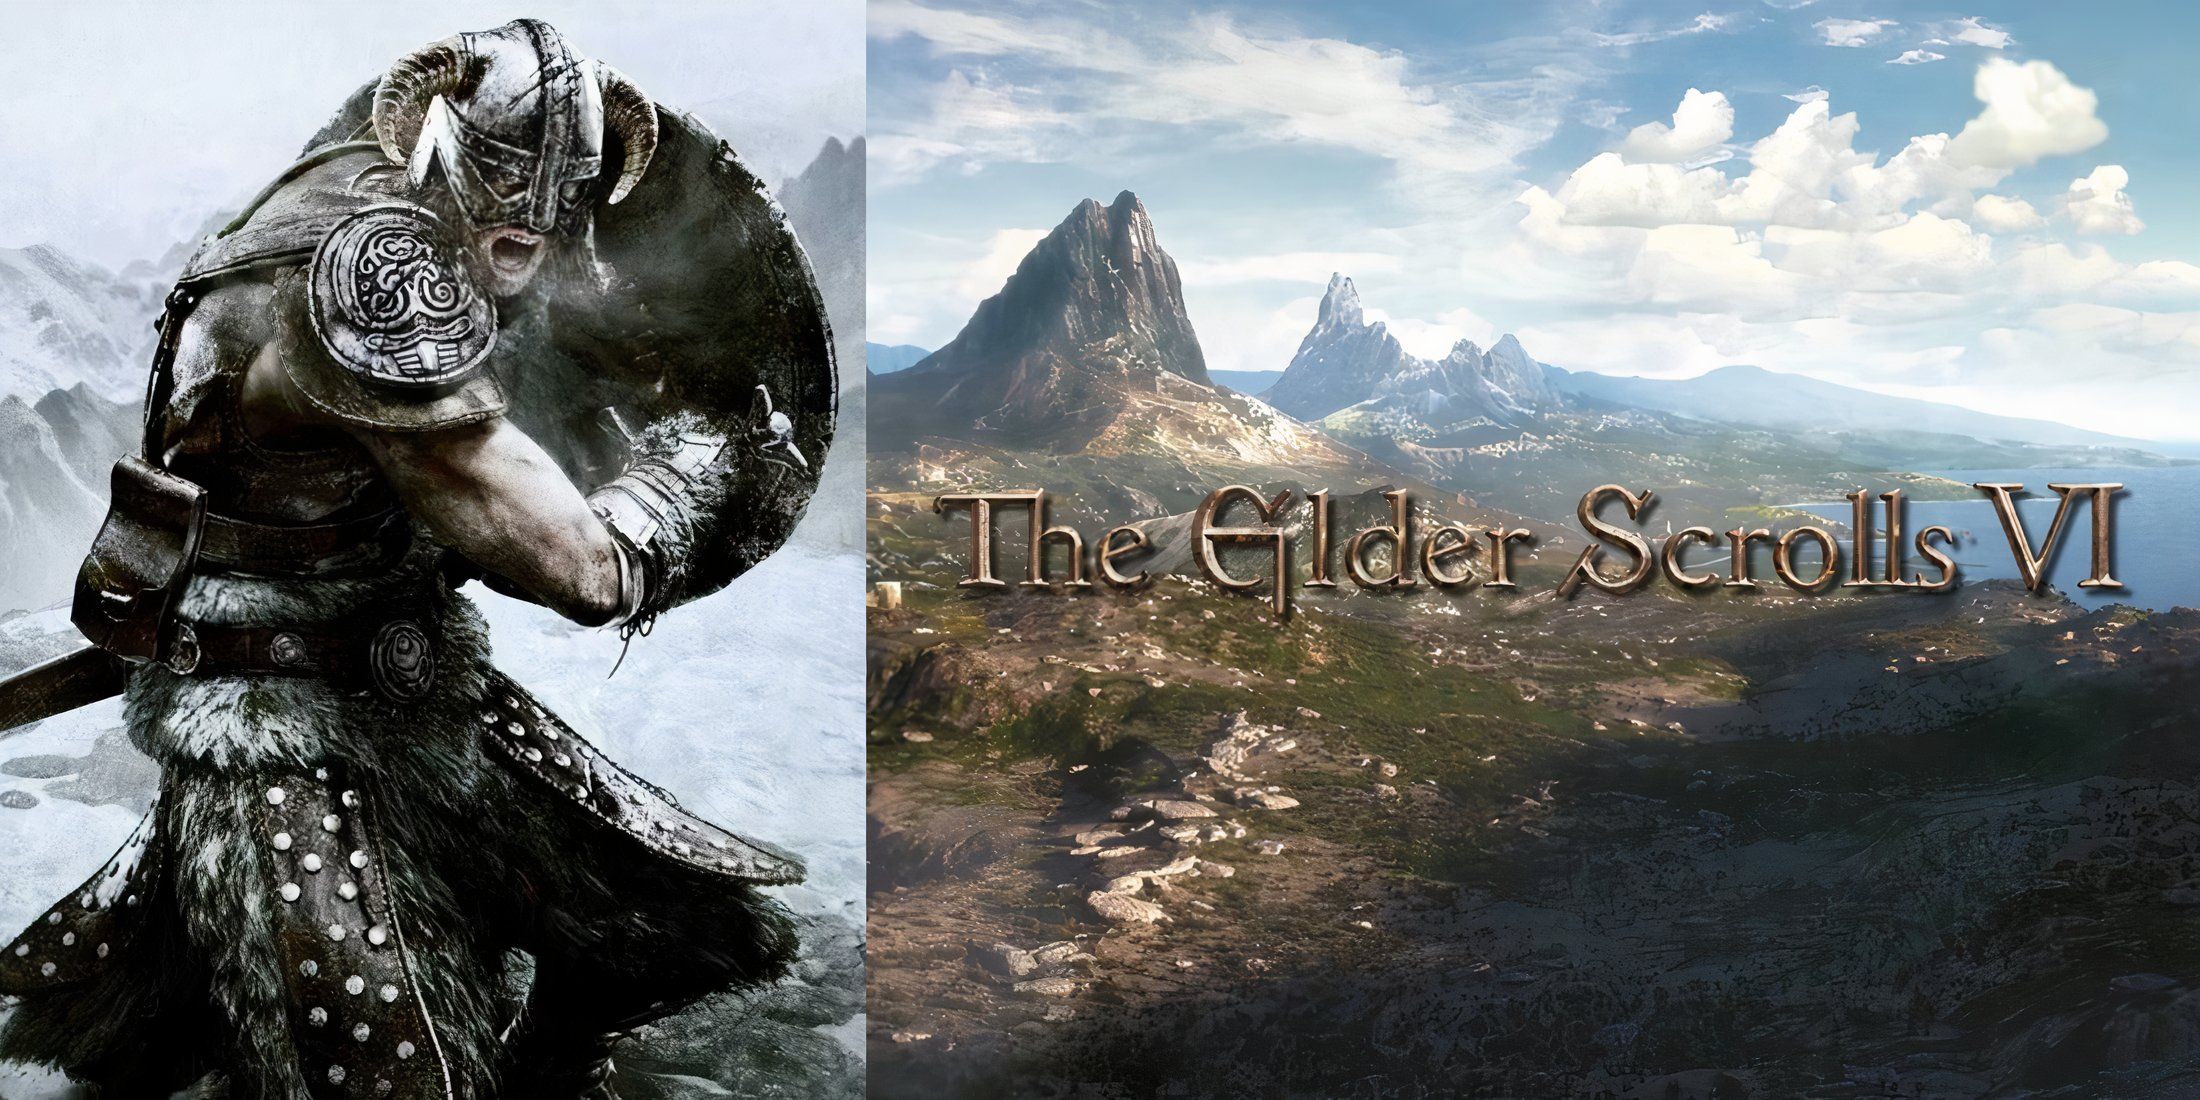 The Dragnborn from Skyrim and the Elder Scrolls 6 logo